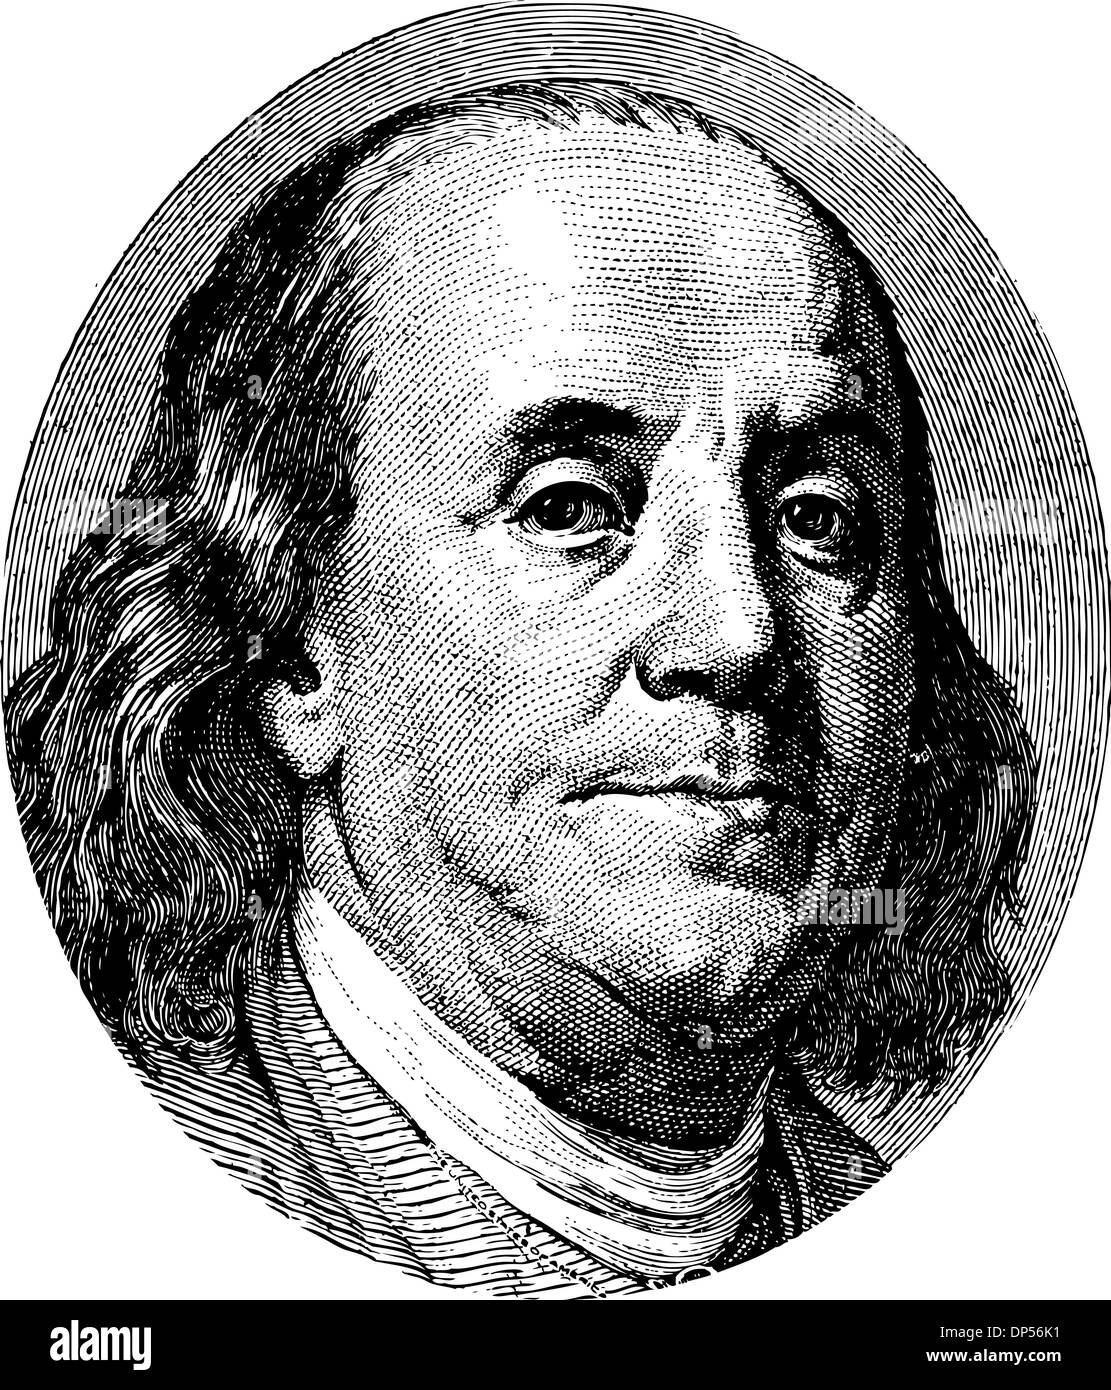 Benjamin Franklin portrait from US dollar bill Stock Photo